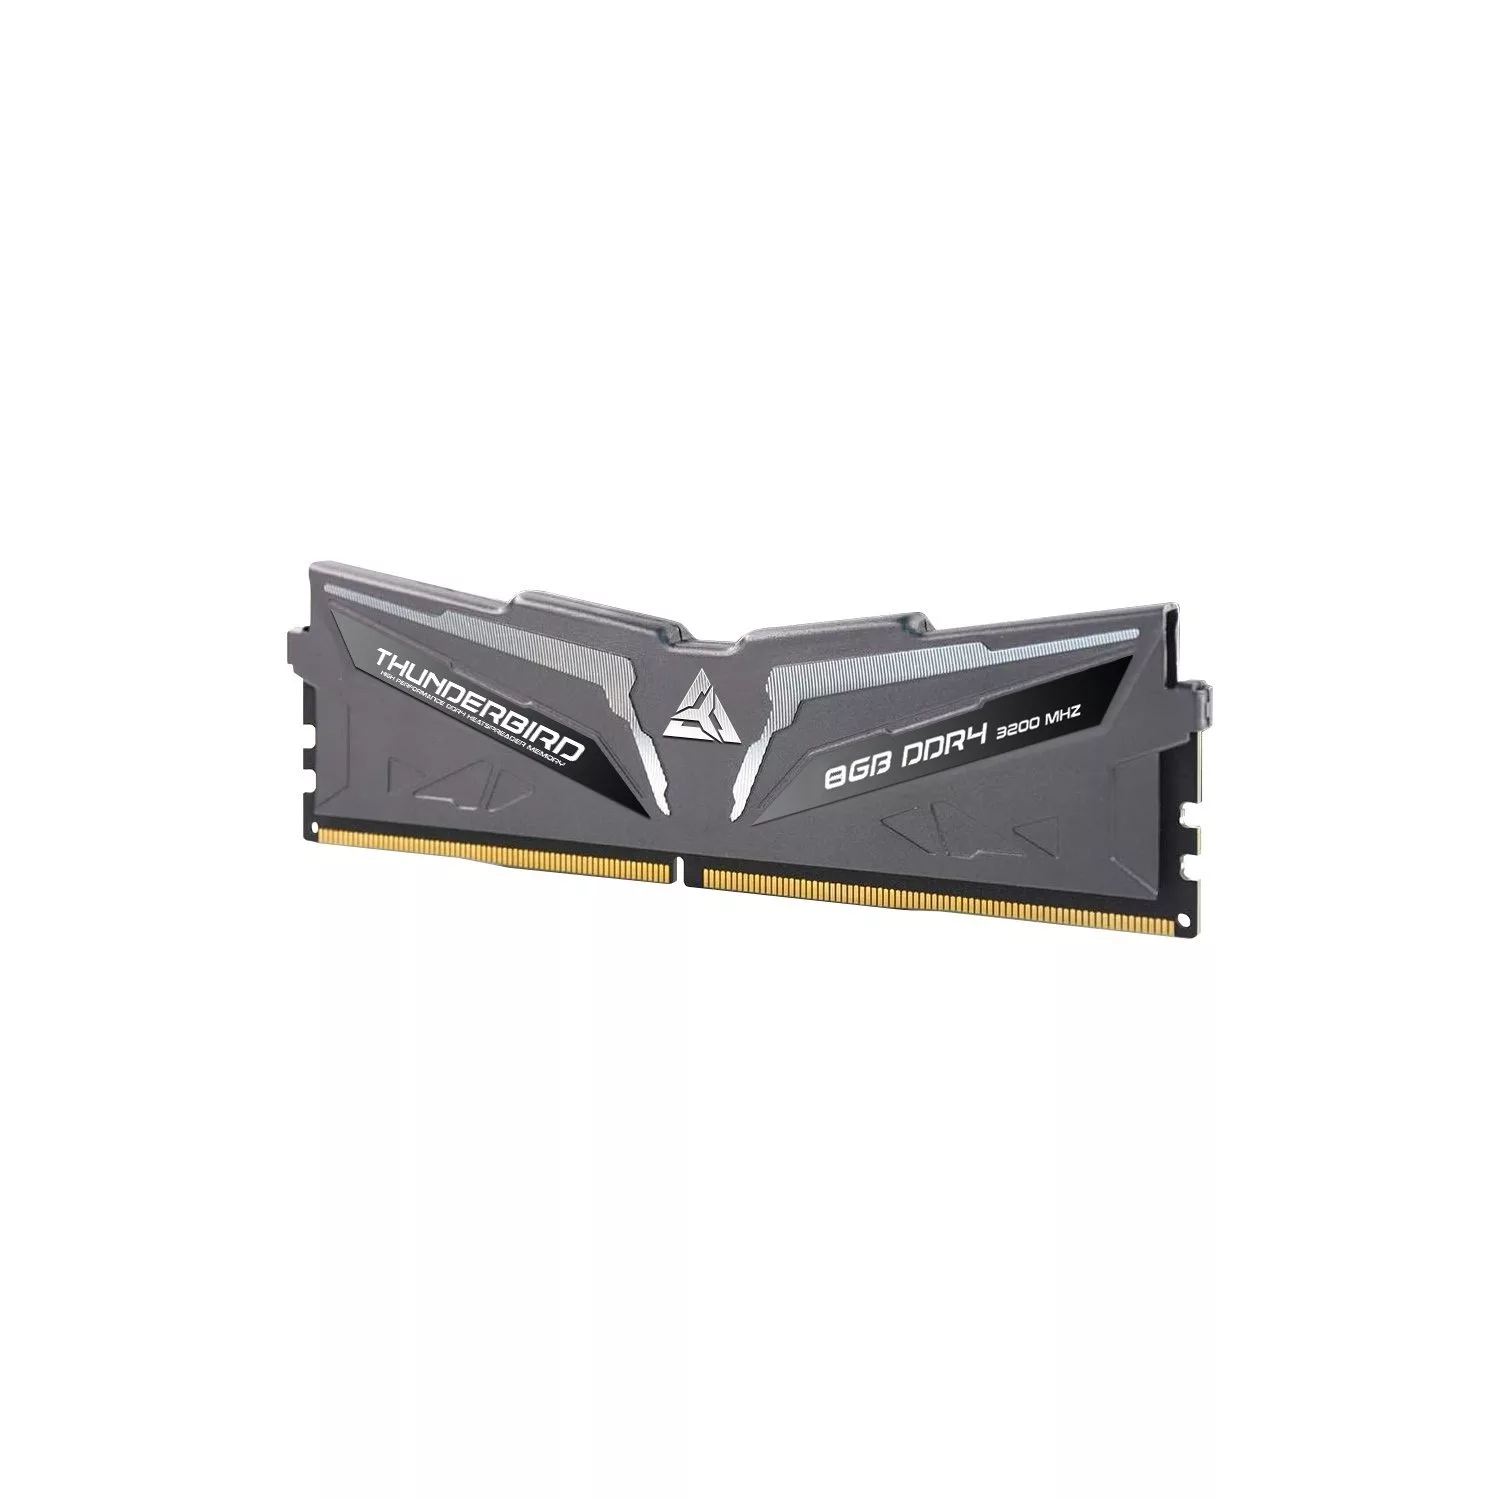 Ease Thunderbird 8GB DDR4 3200MHz Gaming RAM